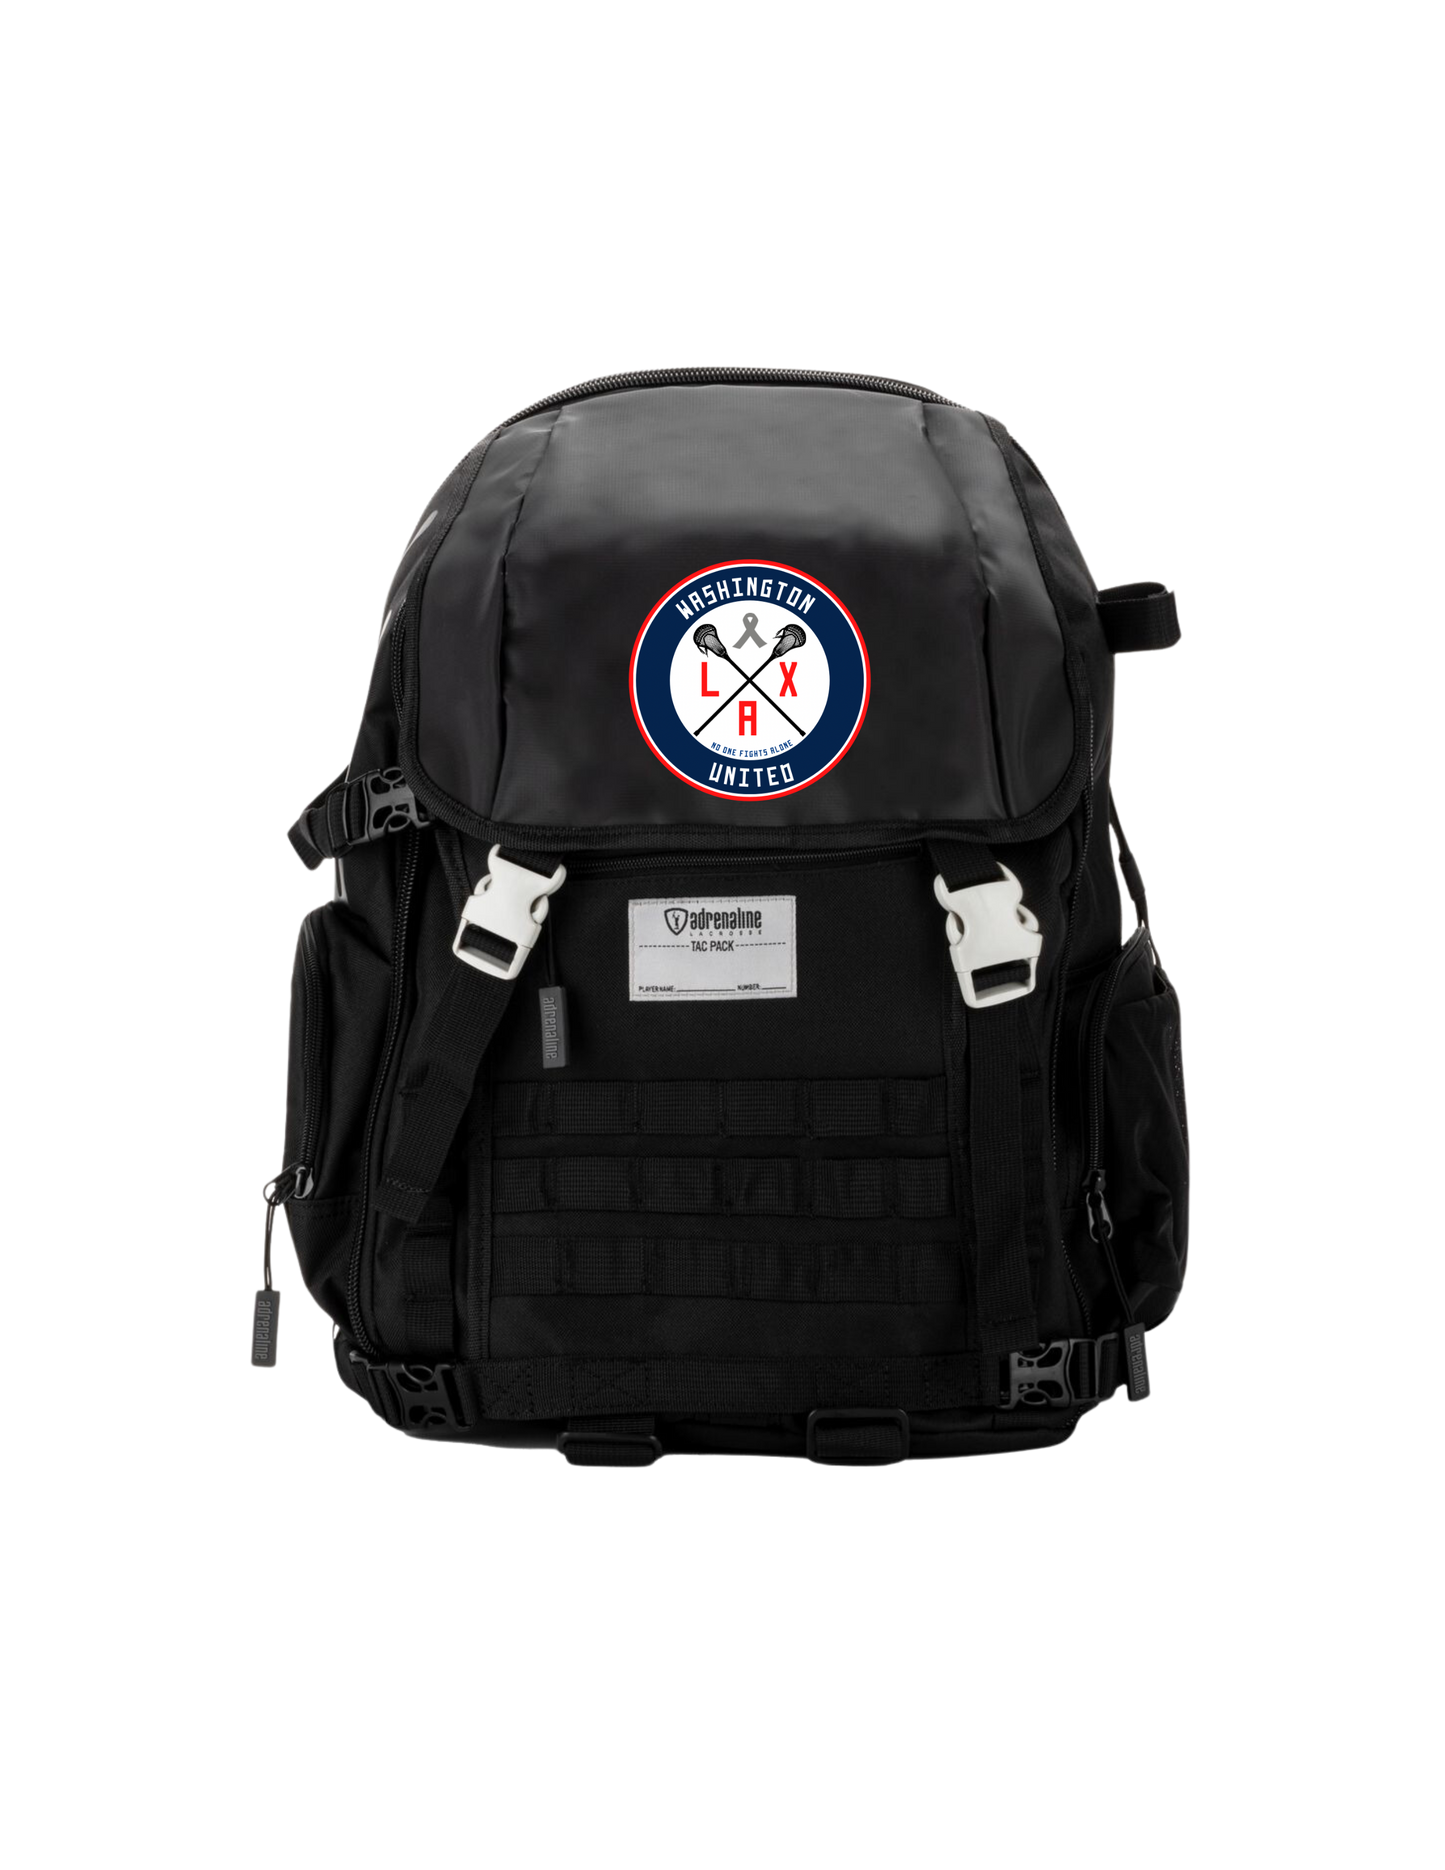 WUL Adrenaline Tac-Pack Backpack